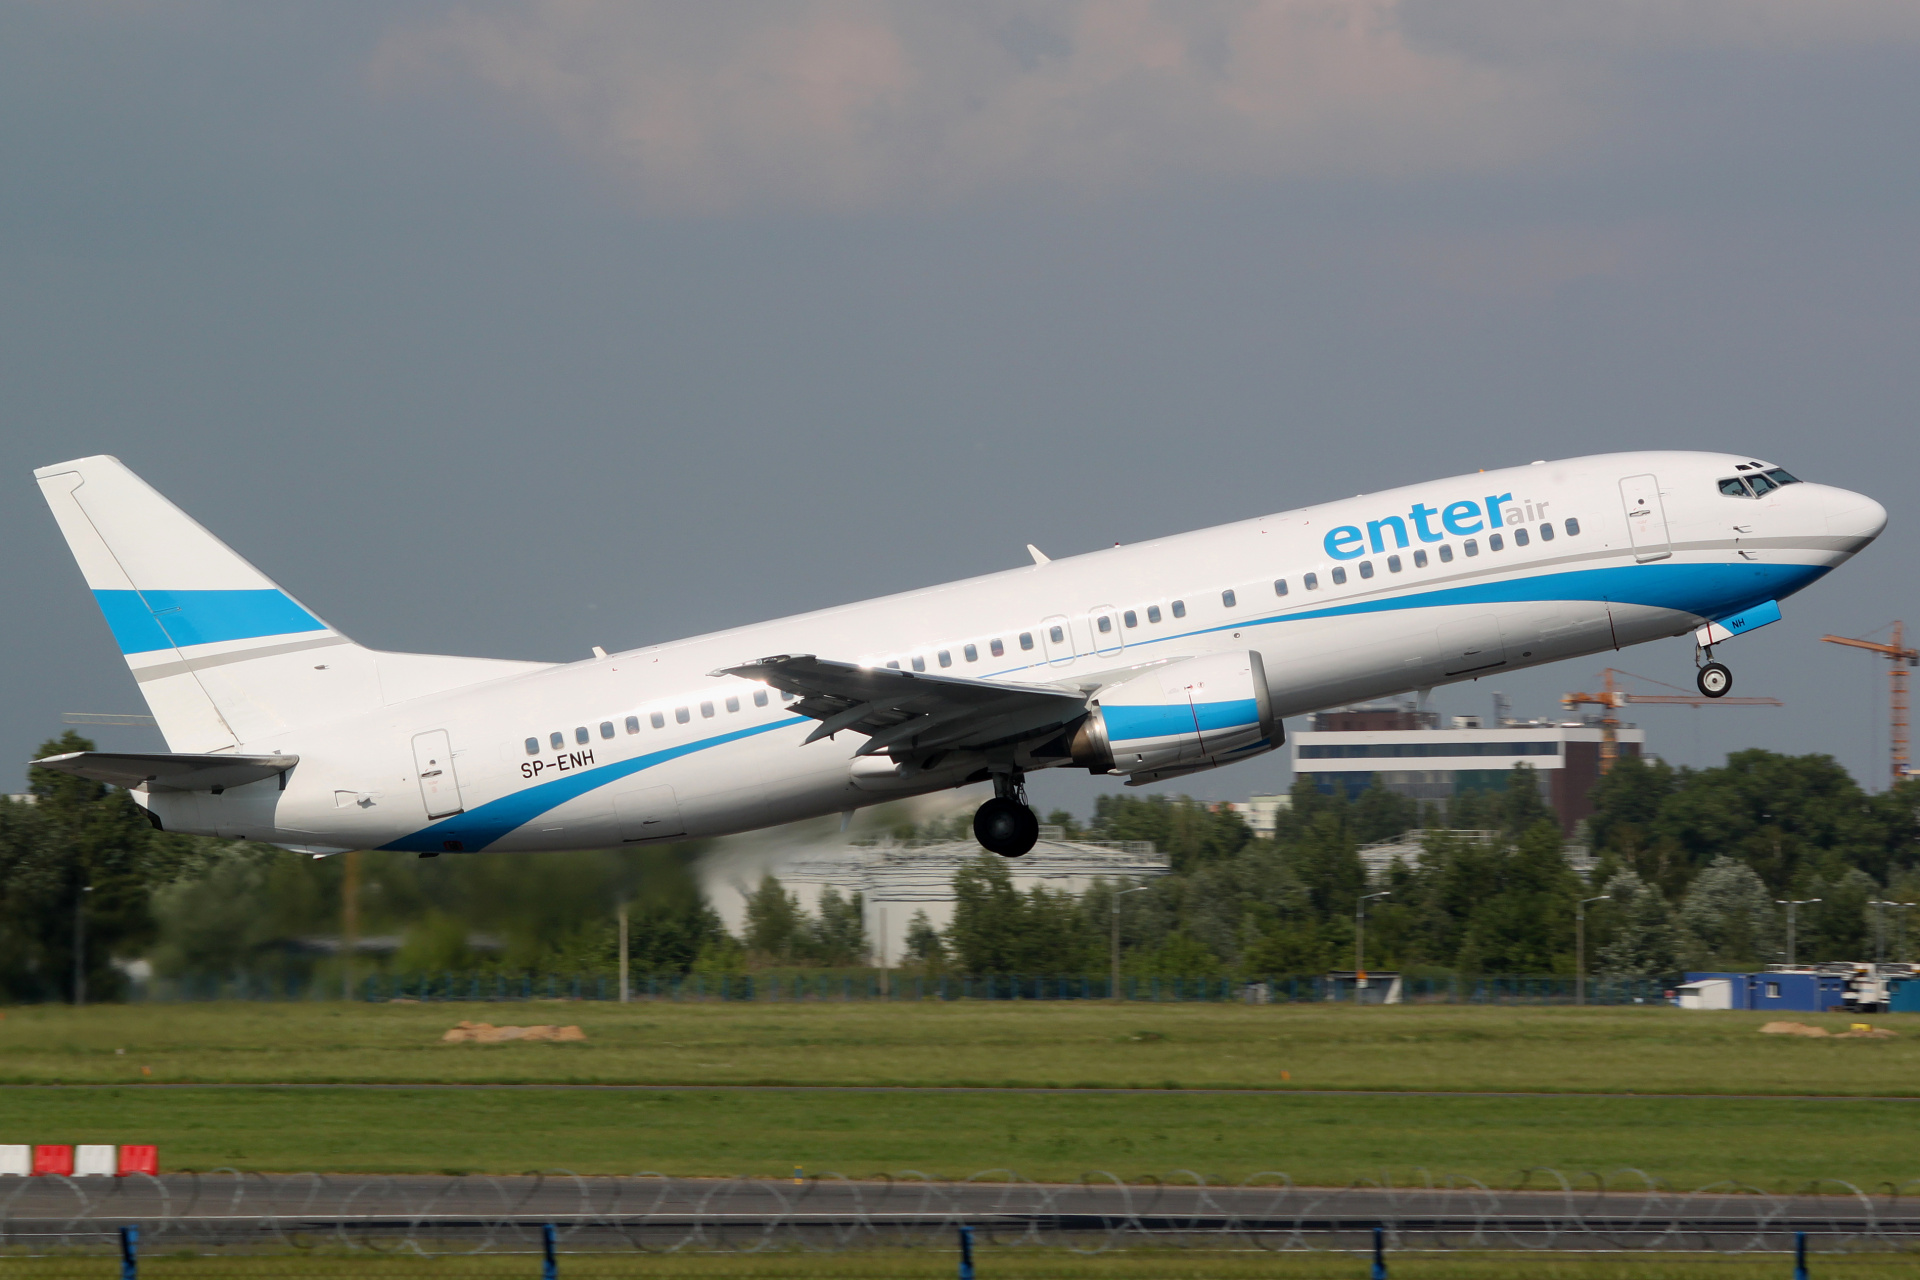 SP-ENH (Samoloty » Spotting na EPWA » Boeing 737-400 » Enter Air)